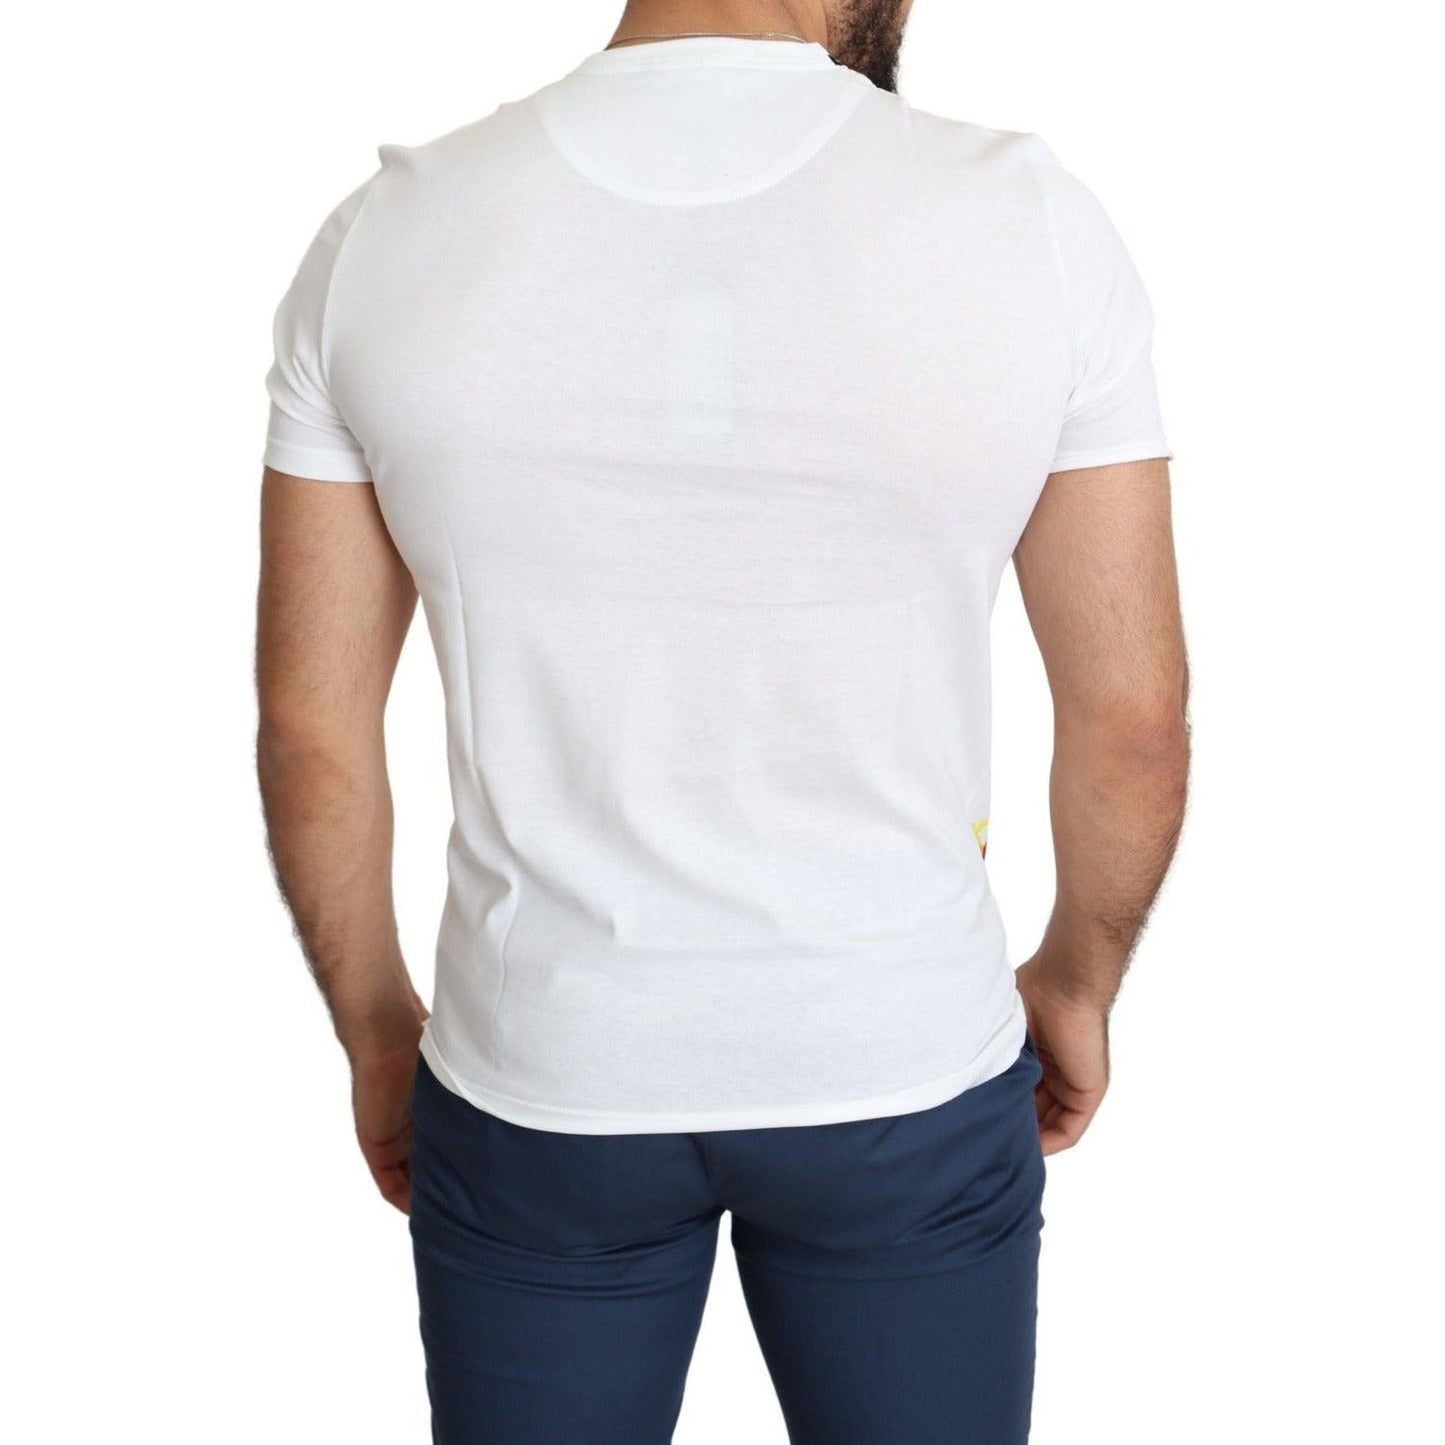 Dolce & Gabbana Chic Saint Valentine Print Crew Neck T-Shirt white-saint-valentine-print-cotton-men-t-shirt